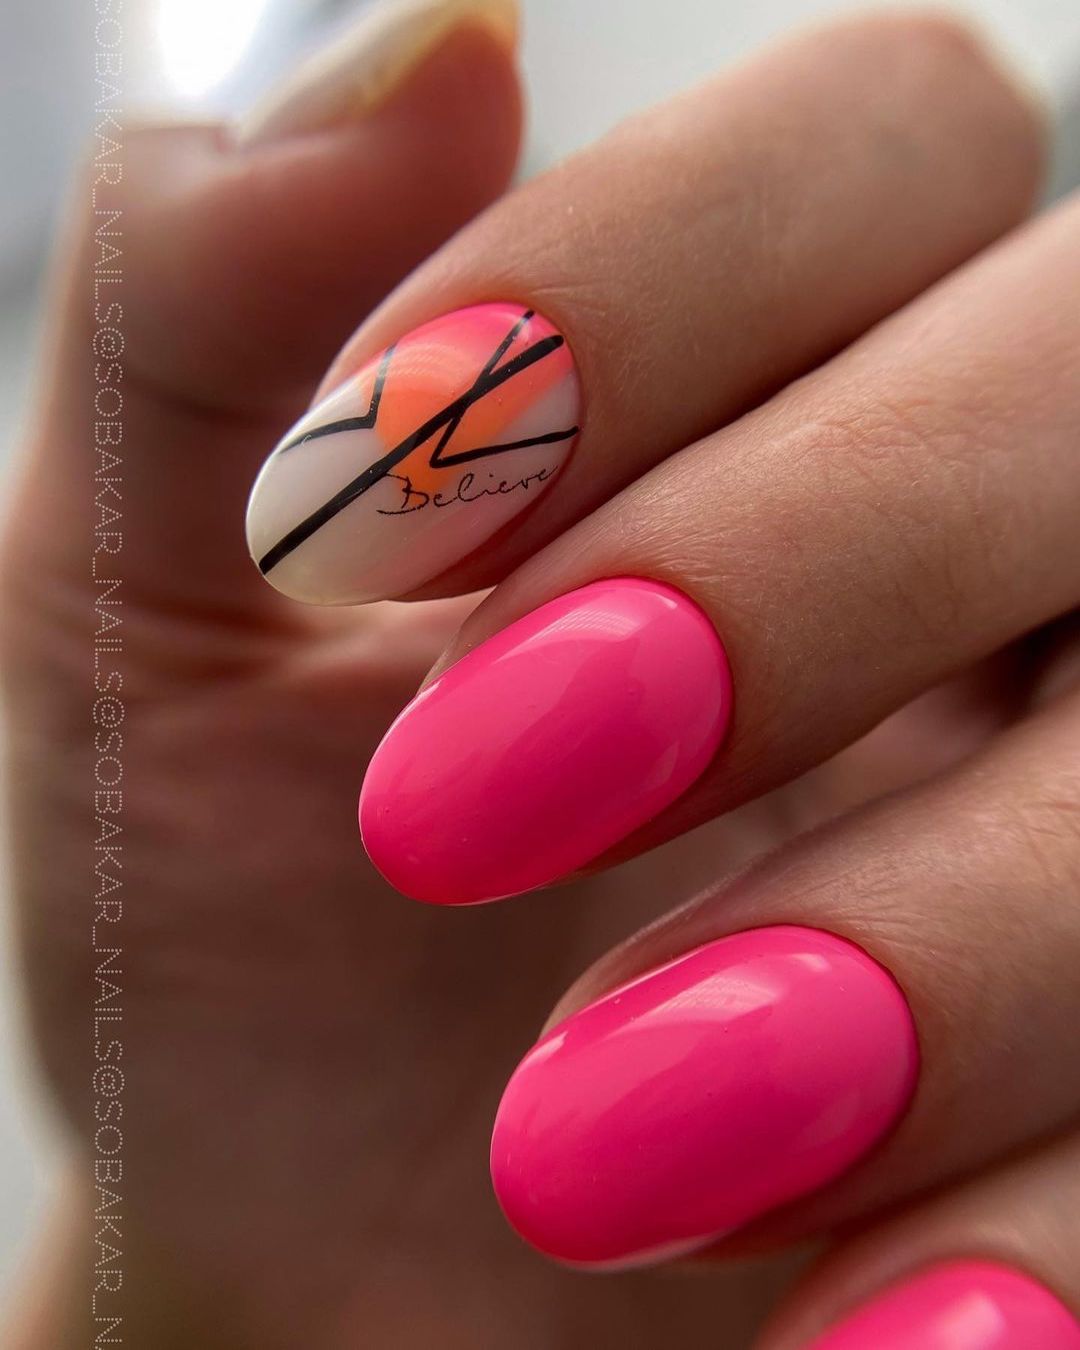 bachelorette nails pink